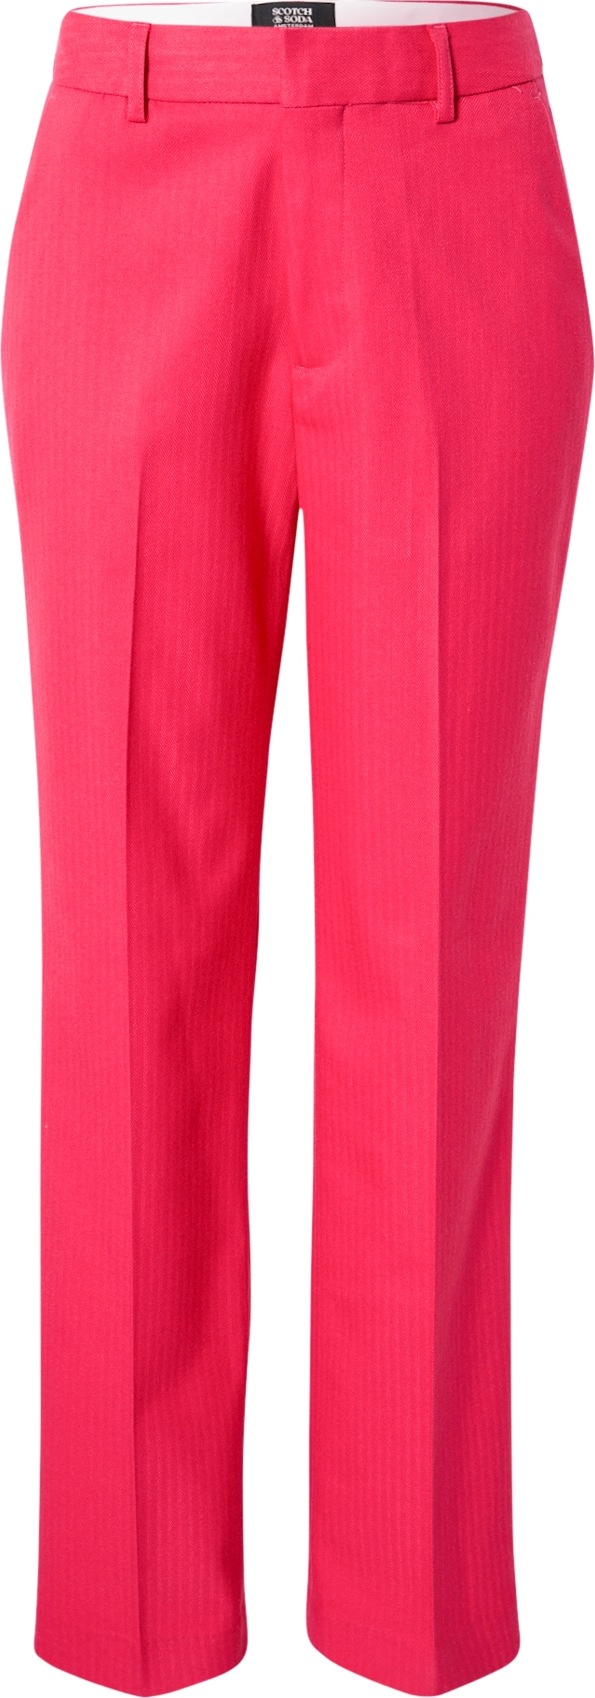 SCOTCH & SODA Kalhoty s puky 'Hailey' pink